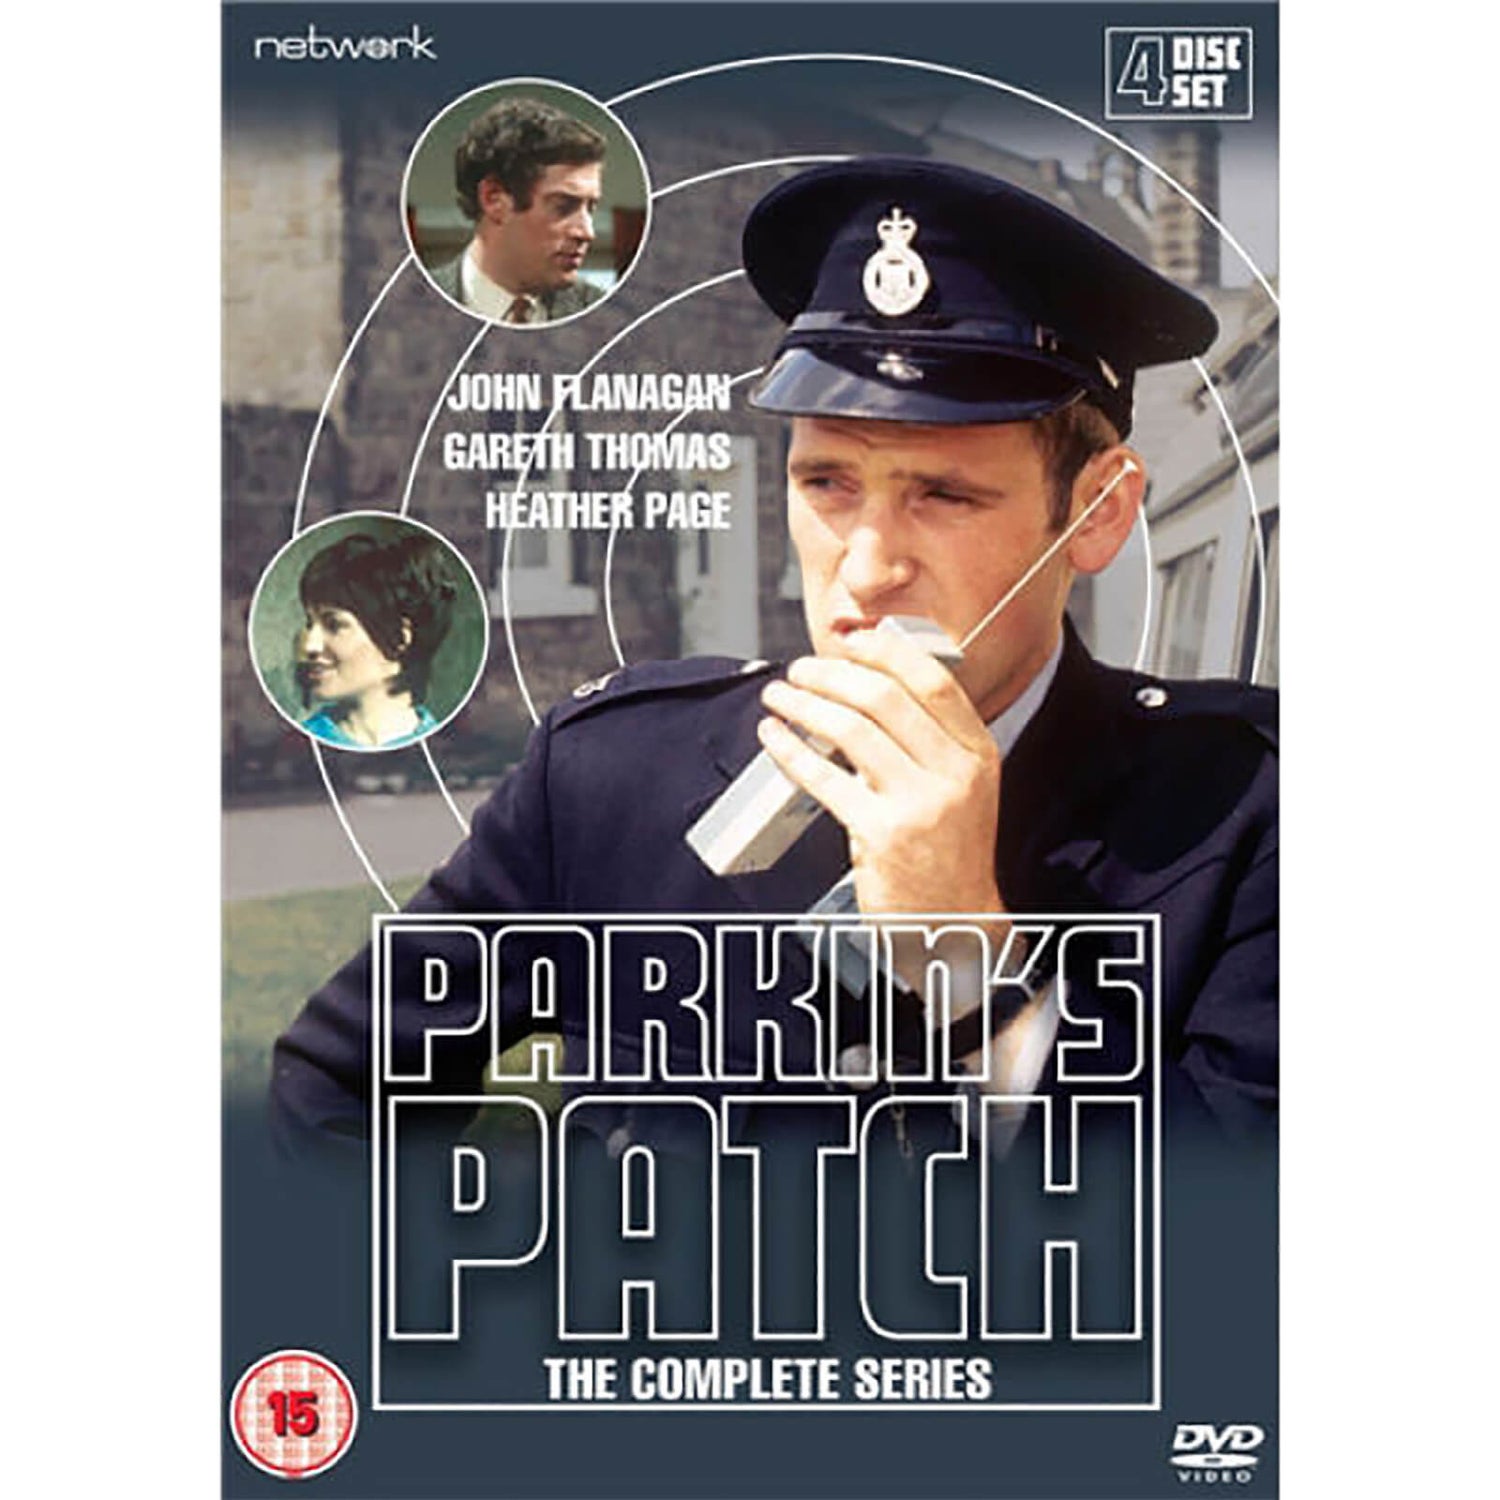 Parkins Patch - Volume One